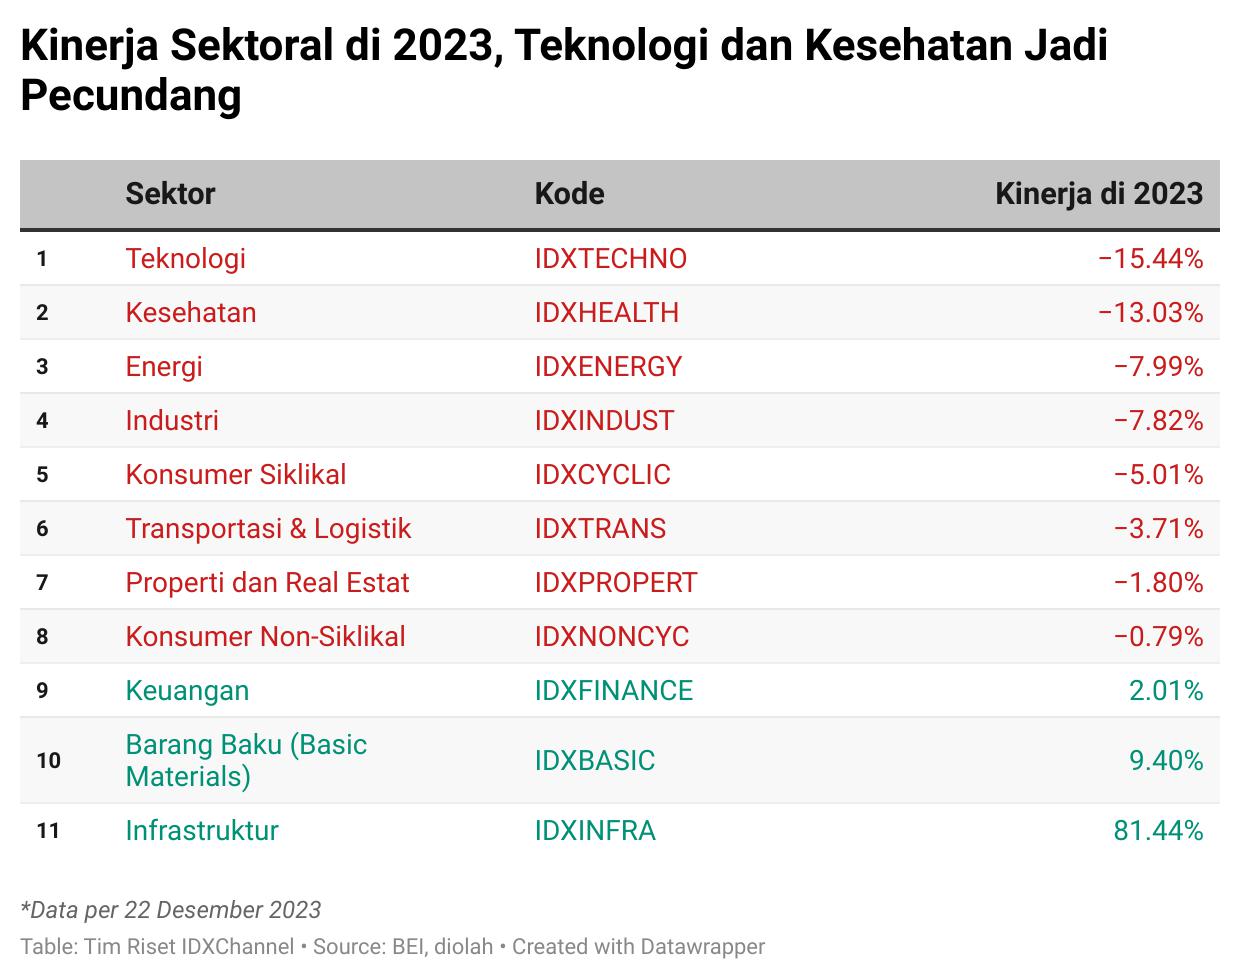 Saham EMTK, BUKA, hingga GOTO Jeblok, Sektor Teknologi Jadi Pecundang di 2023